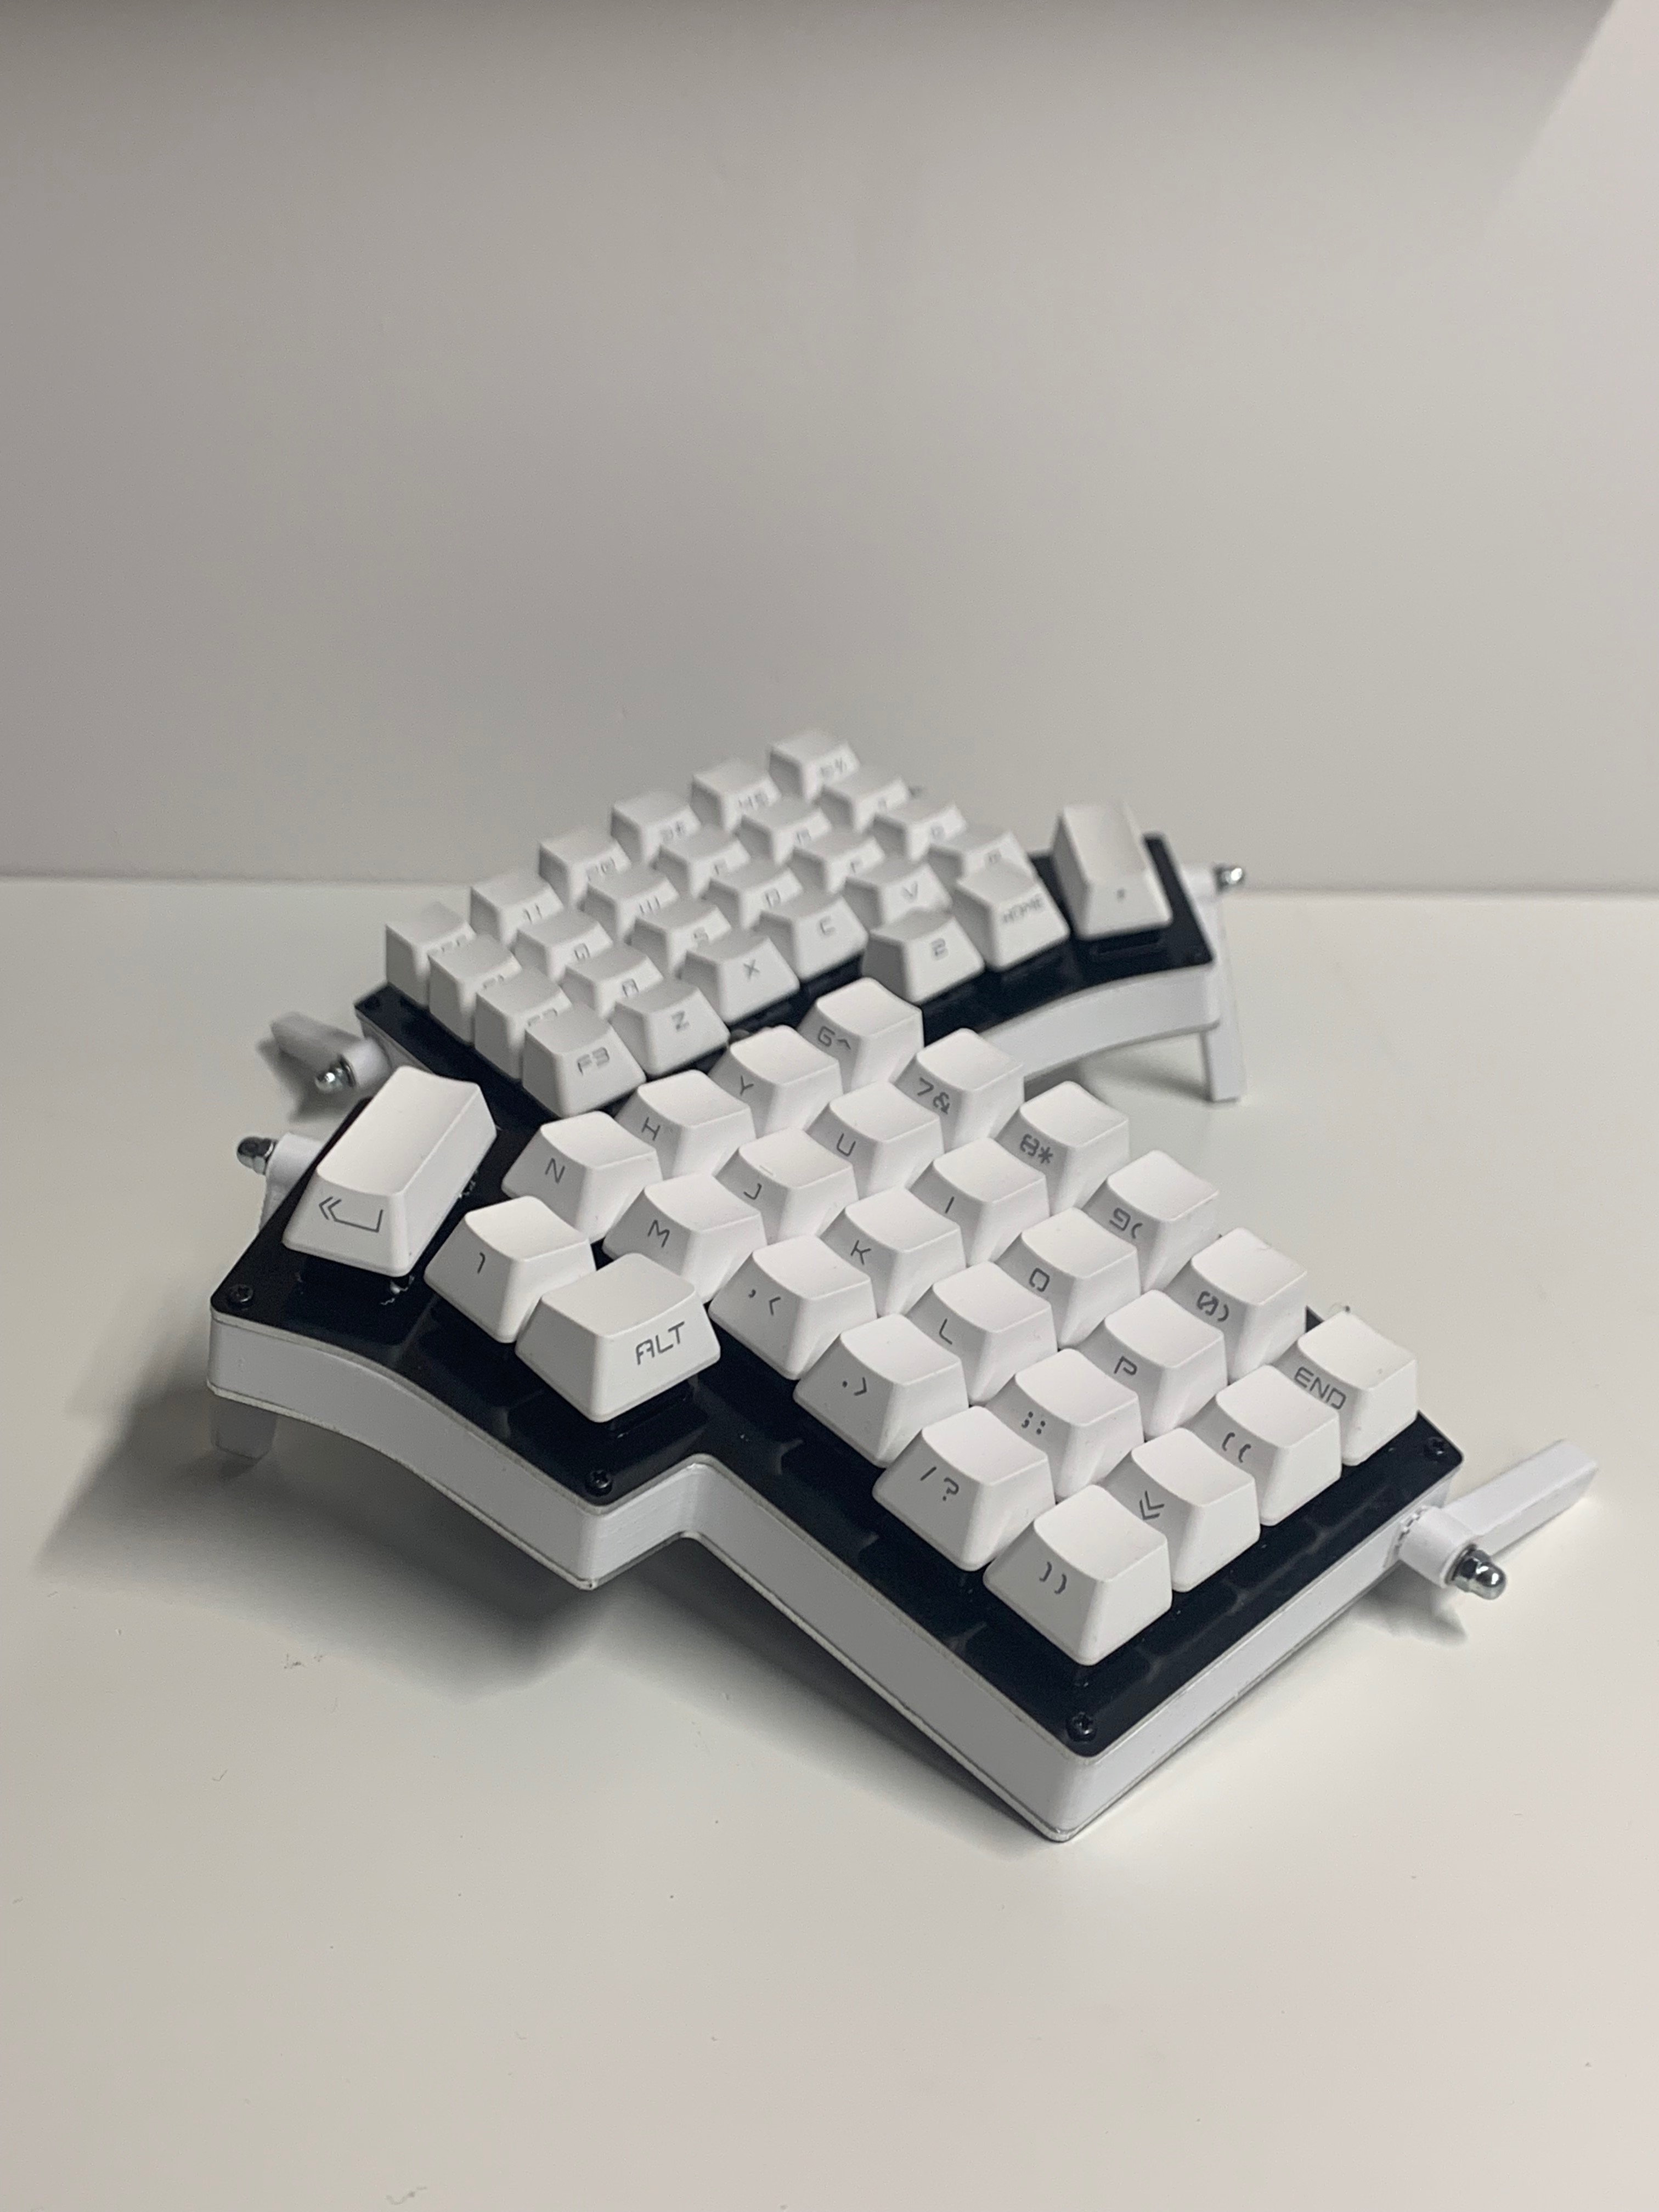 Iris Keyboard Build